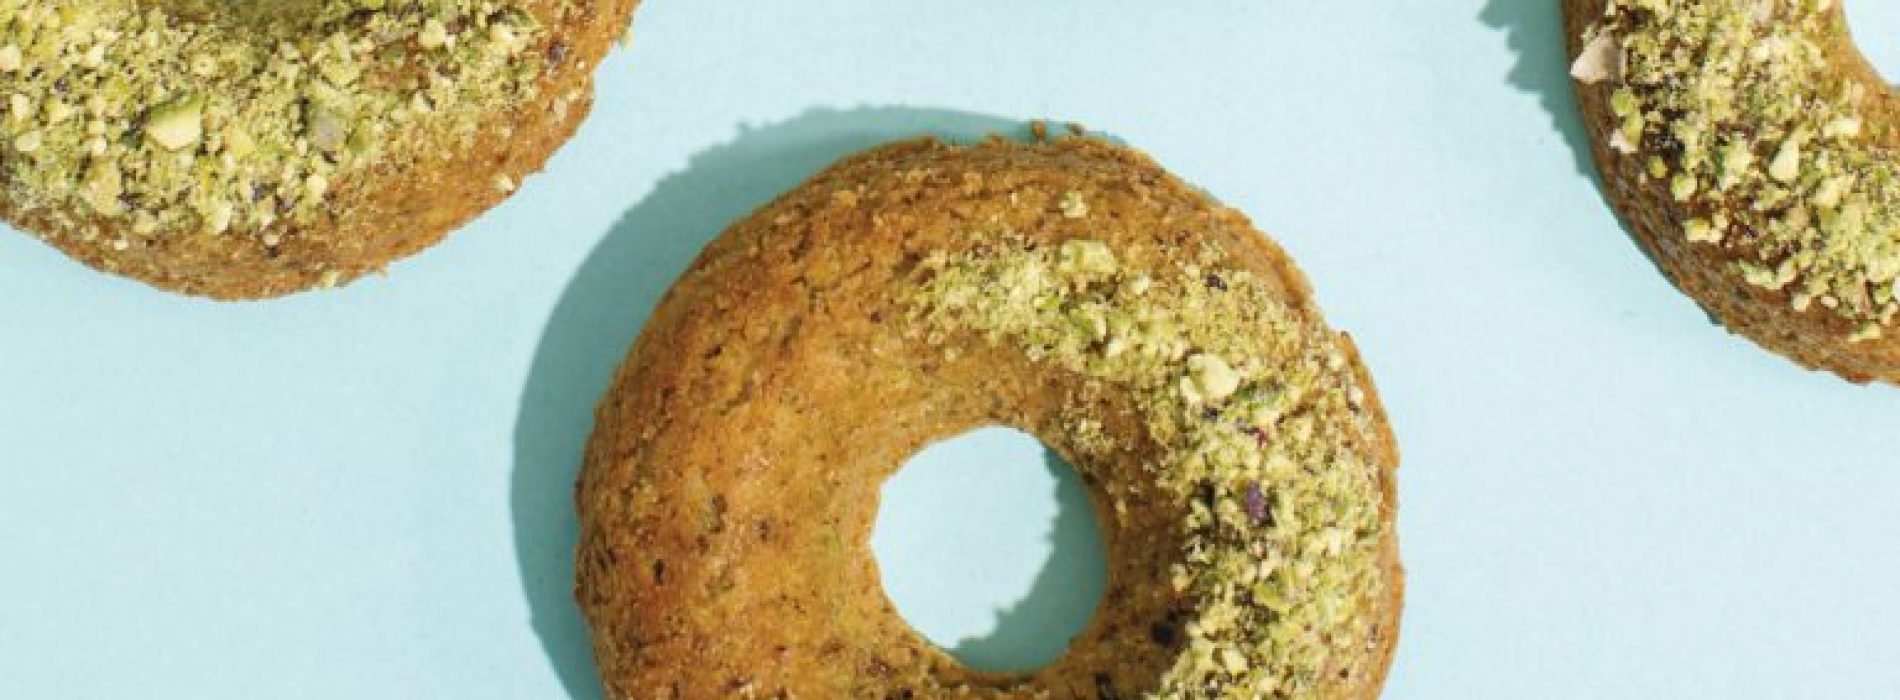 Gezonde desserts: Pistache en kardemom donuts met rozenwater glazuur